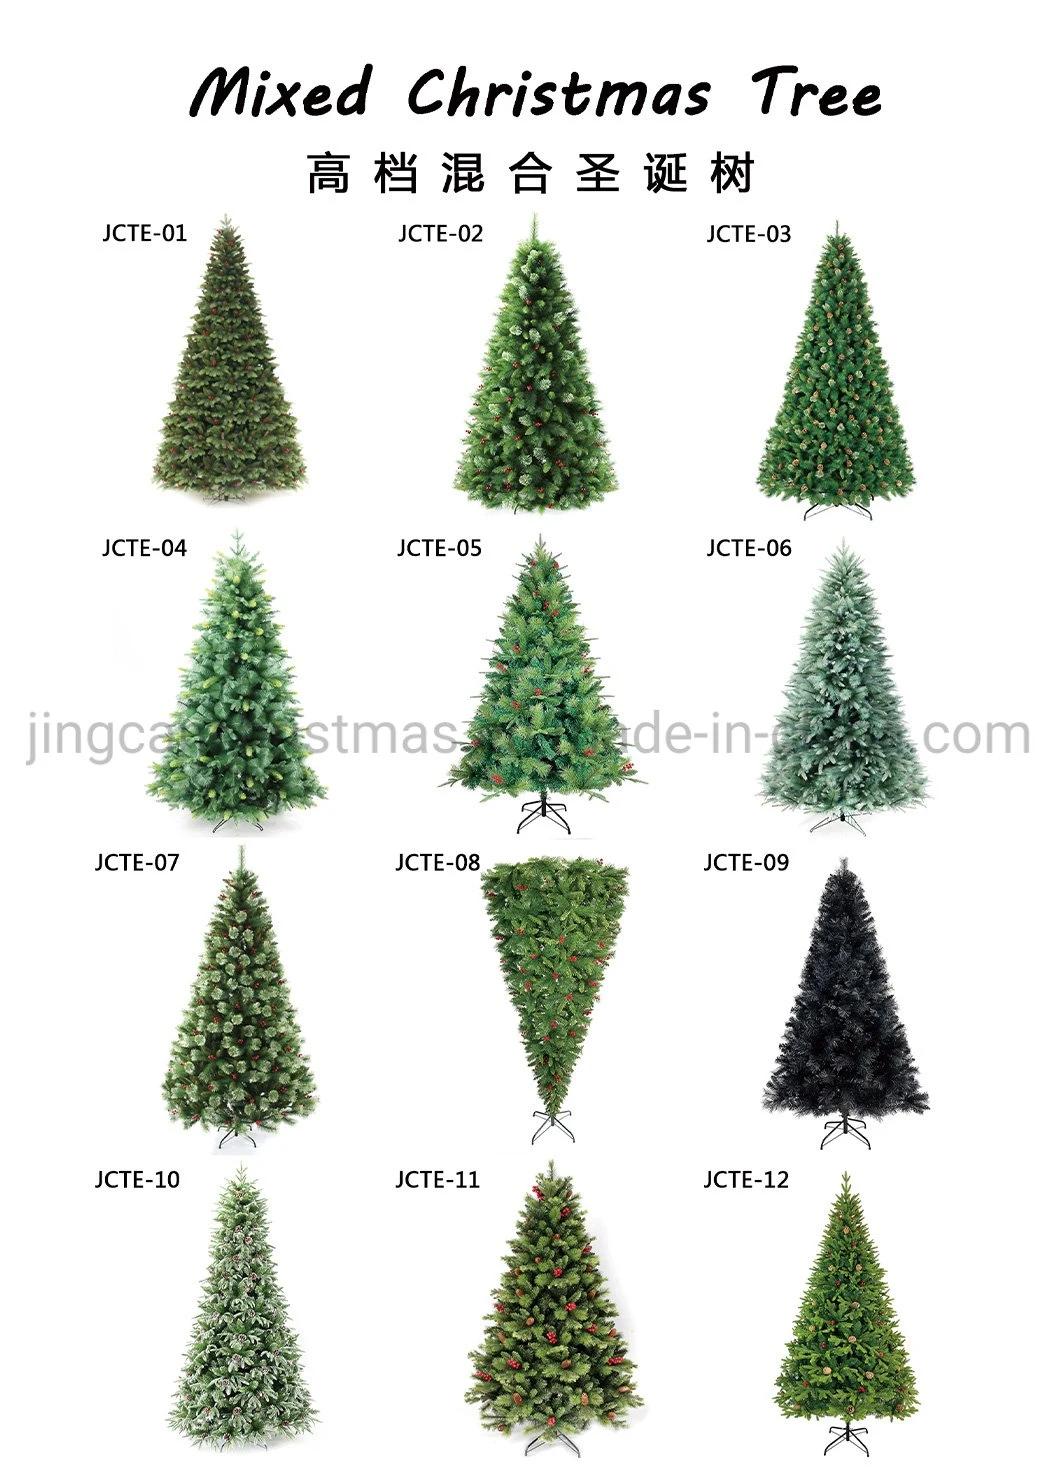 Dec. Metu Colorful Christmas Tree for decoration Home